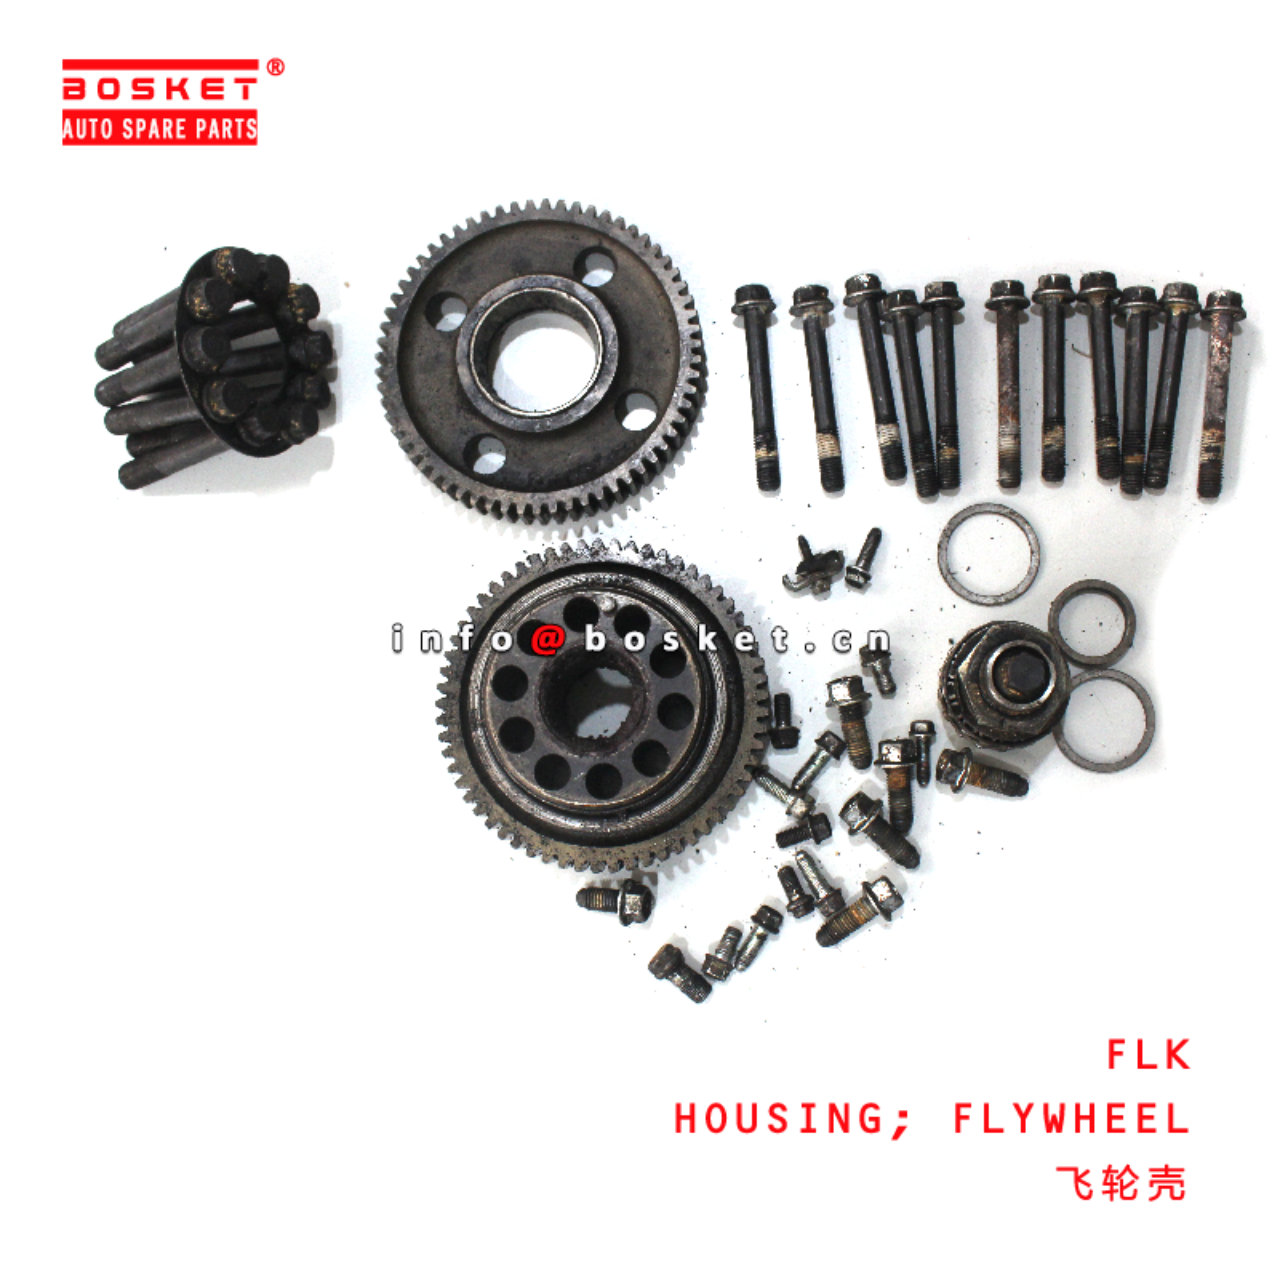 FLK Flywheel Housing suitable for ISUZU CYZ51  FLK...